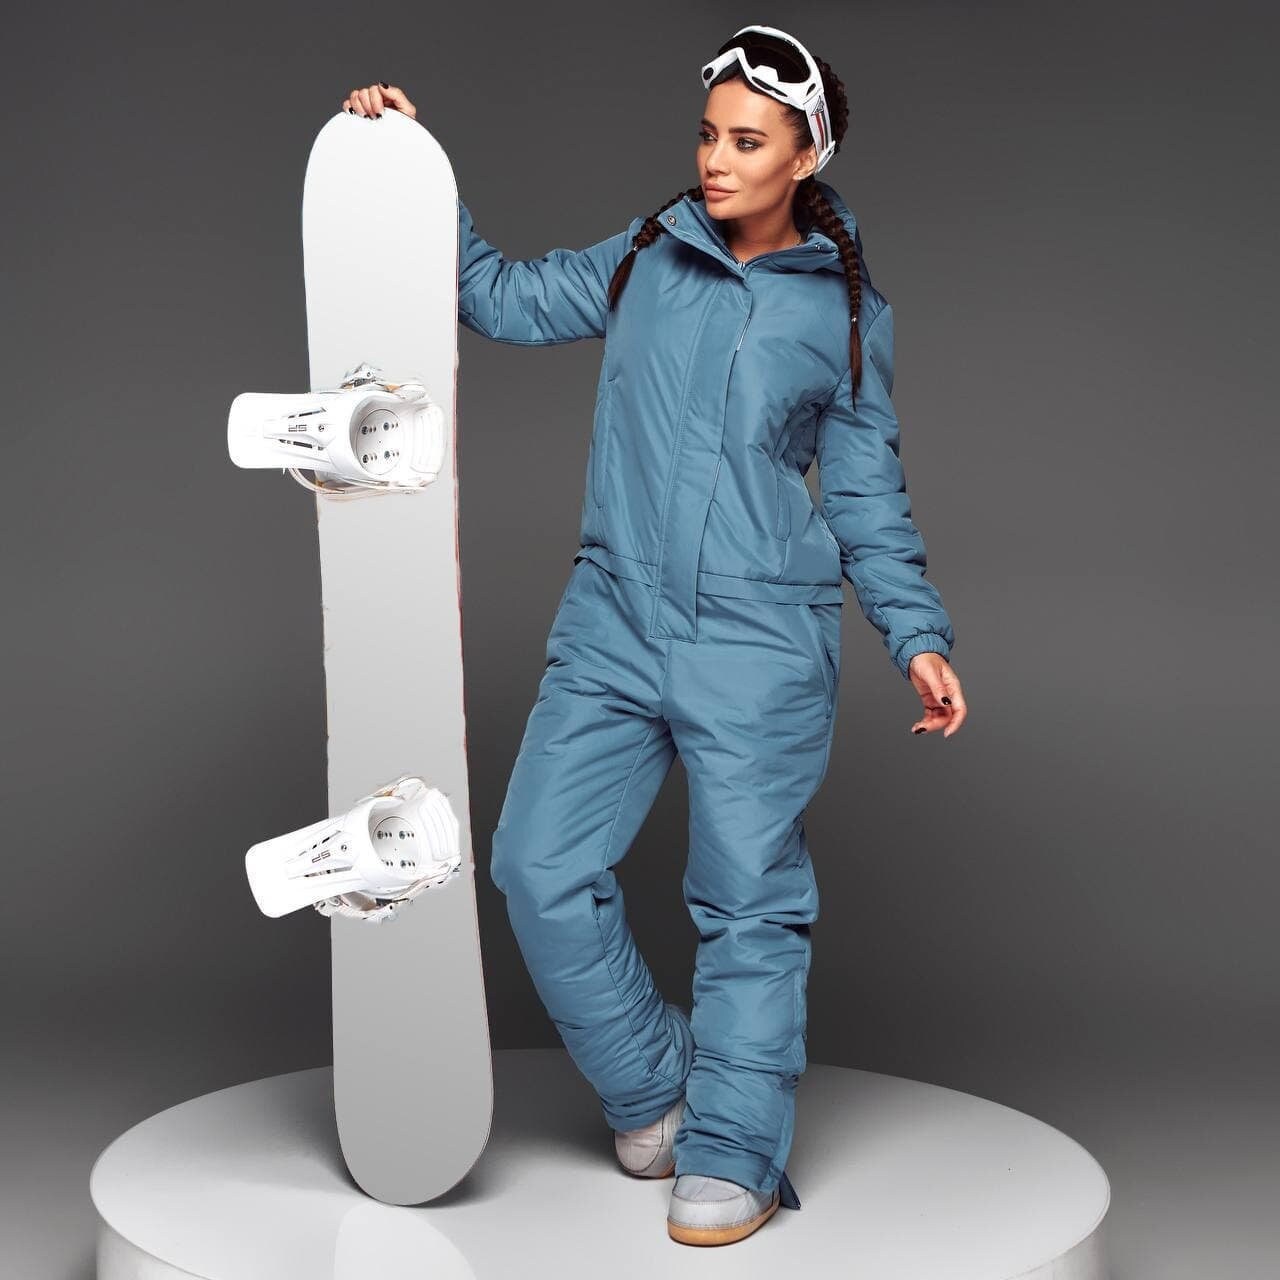 Women's Ski Suits 